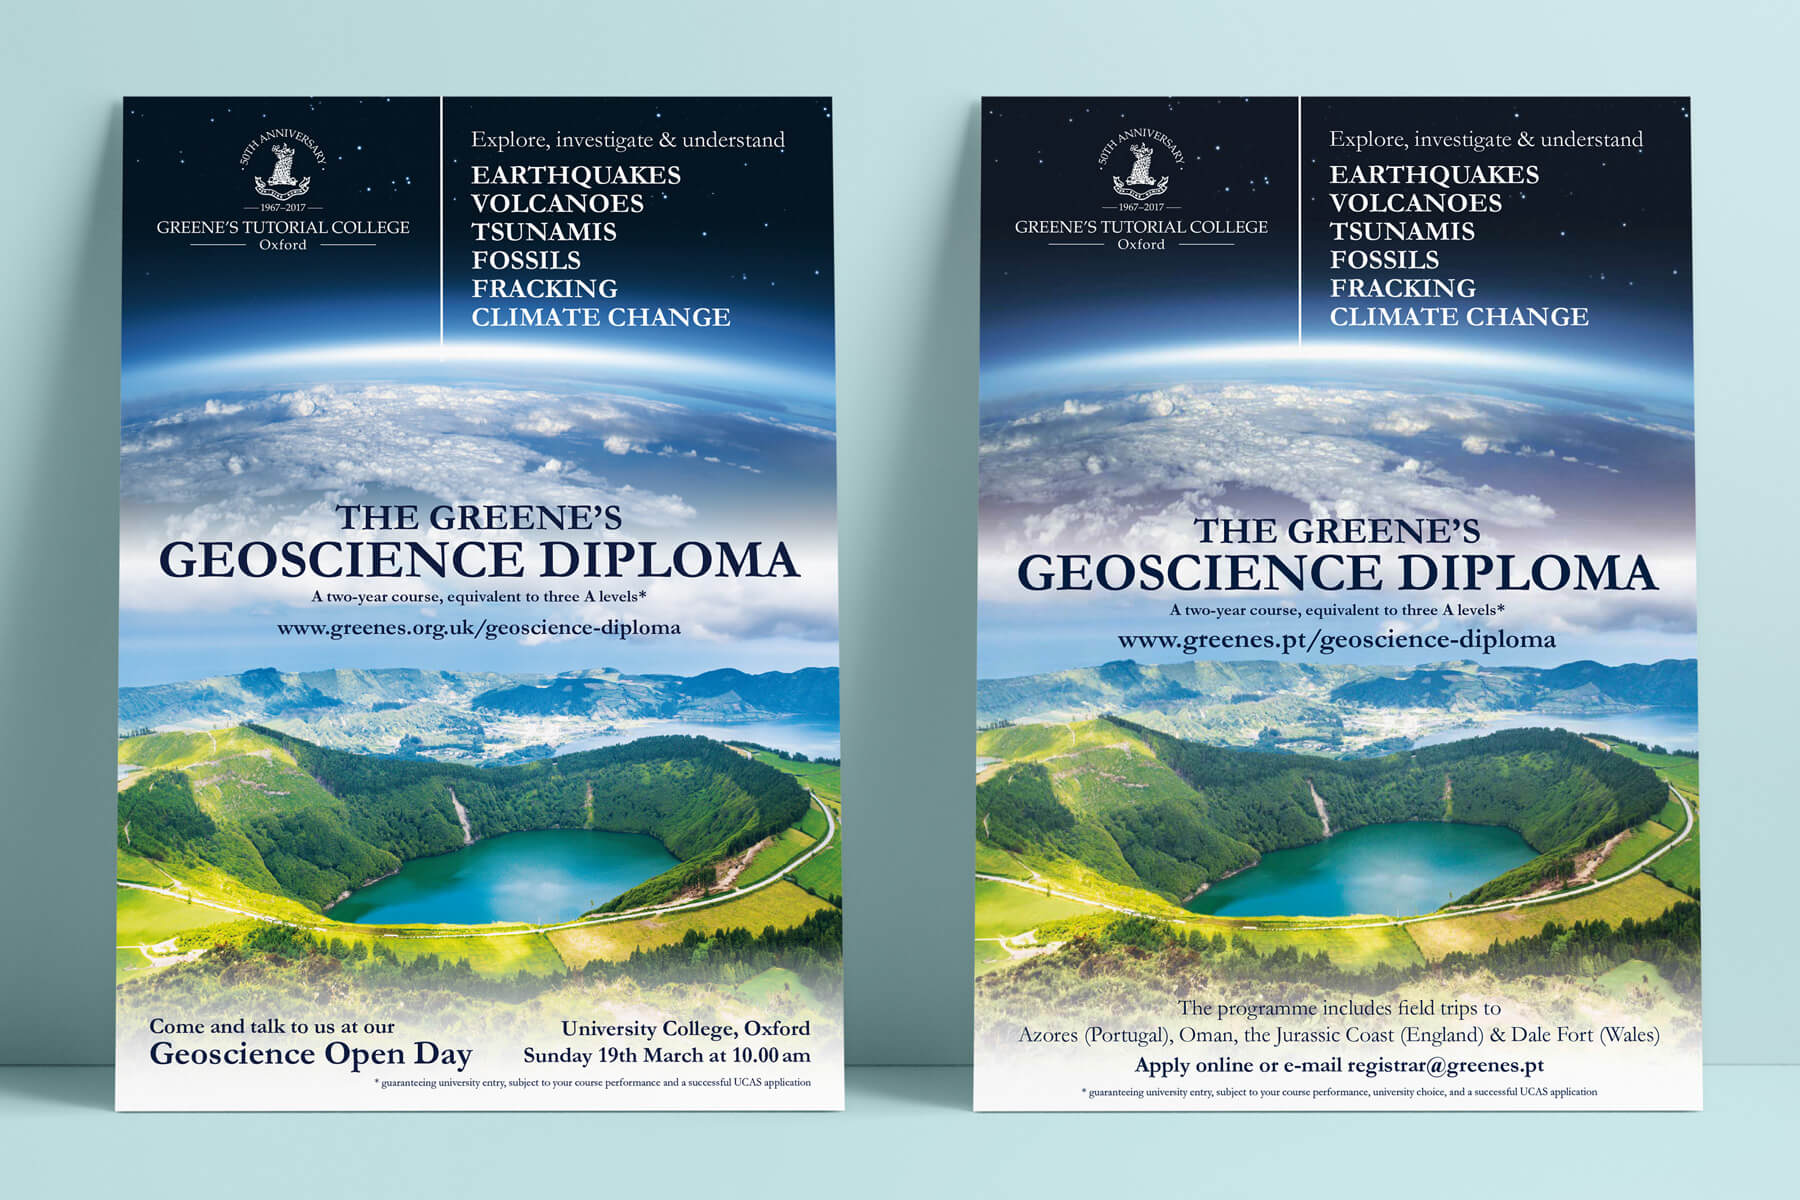 Posters promoting Greene's Tutorial College Geoscience Diploma